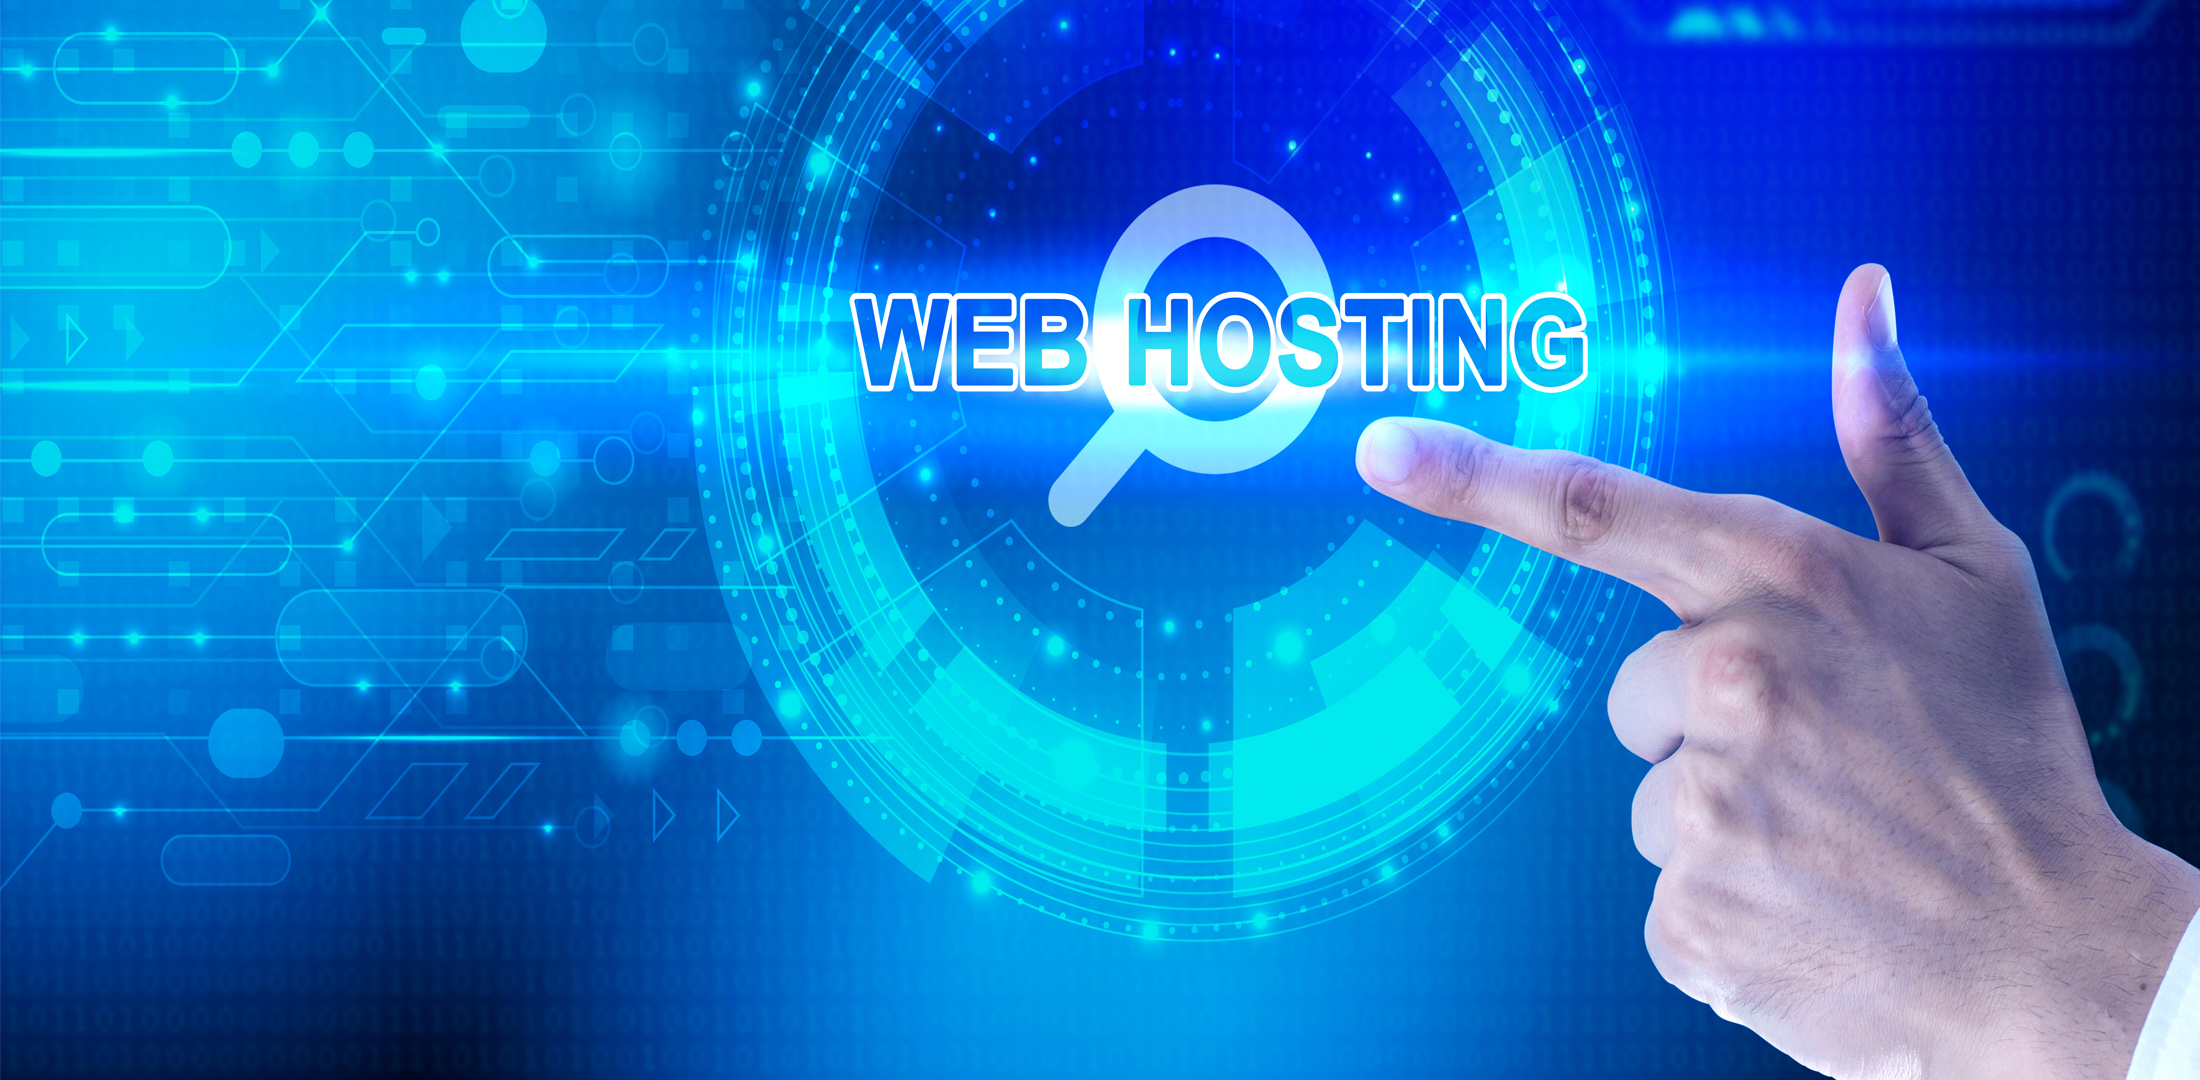 Web Hosting Agency in India